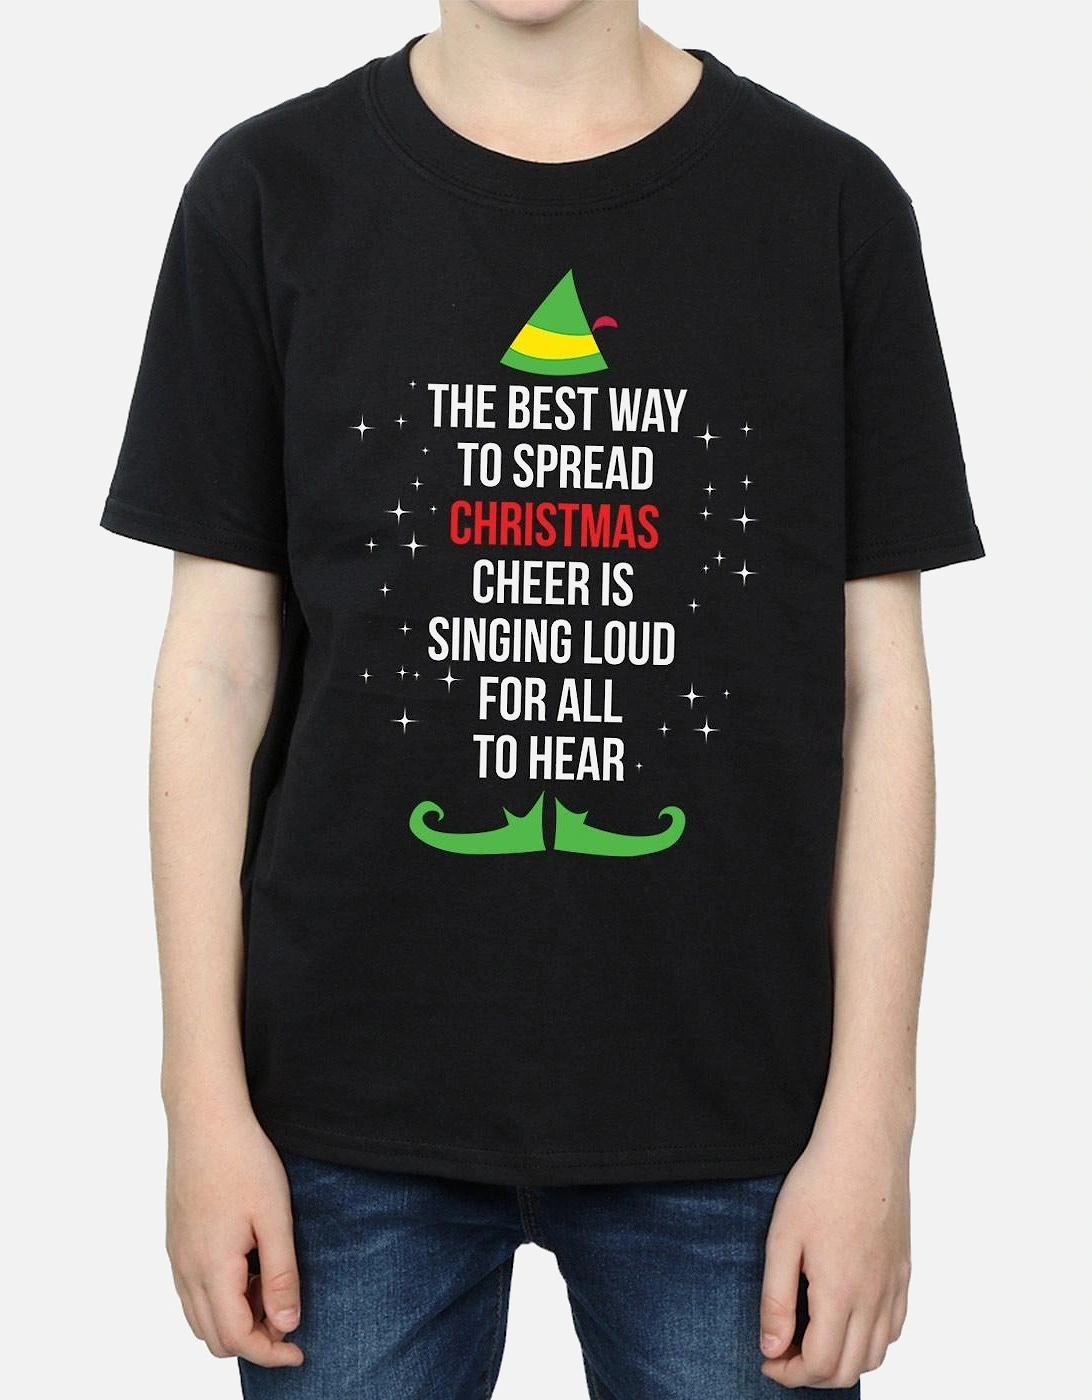 Boys Christmas Cheer Text T-Shirt